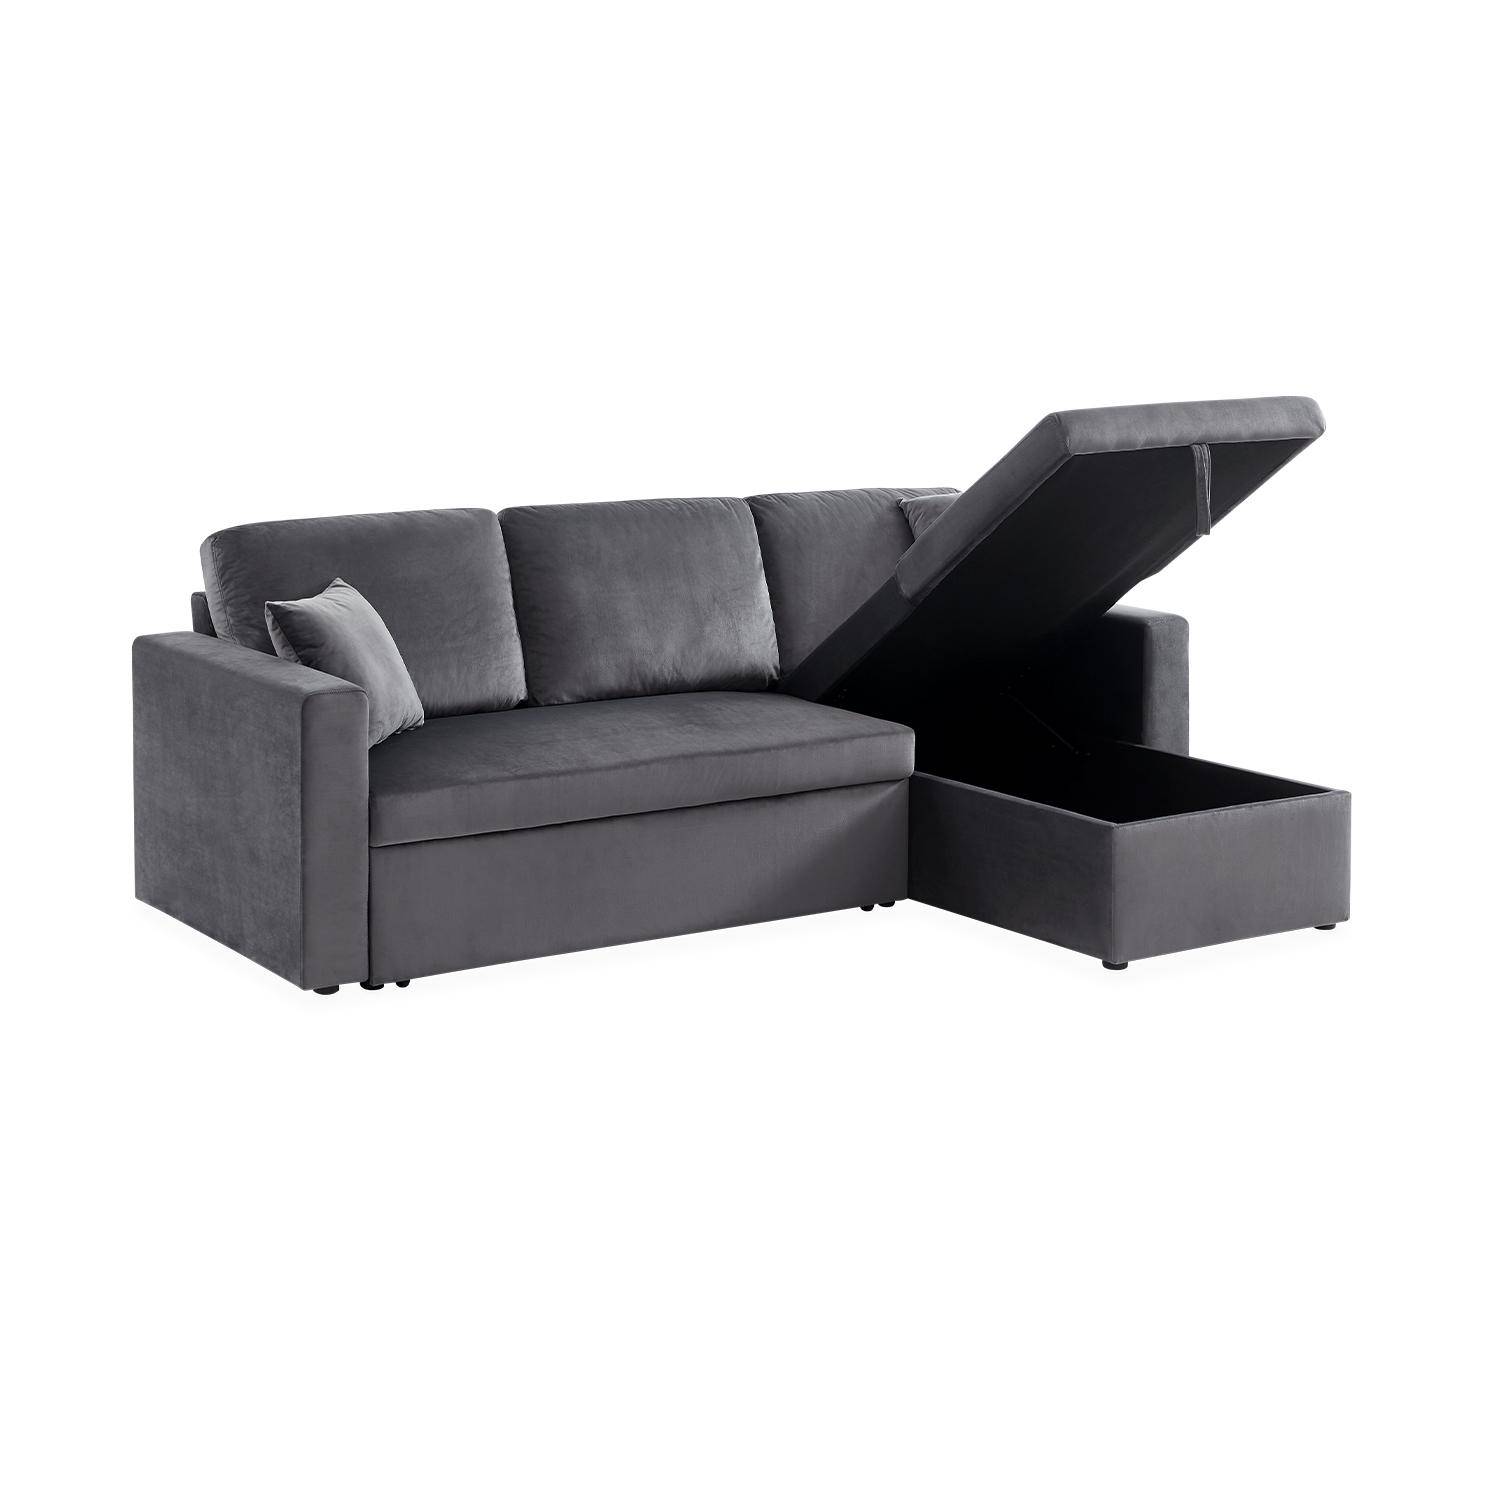 Dark grey velvet 3-seater convertible corner sofa, reversible corner armchair, storage box, modular bed Photo5